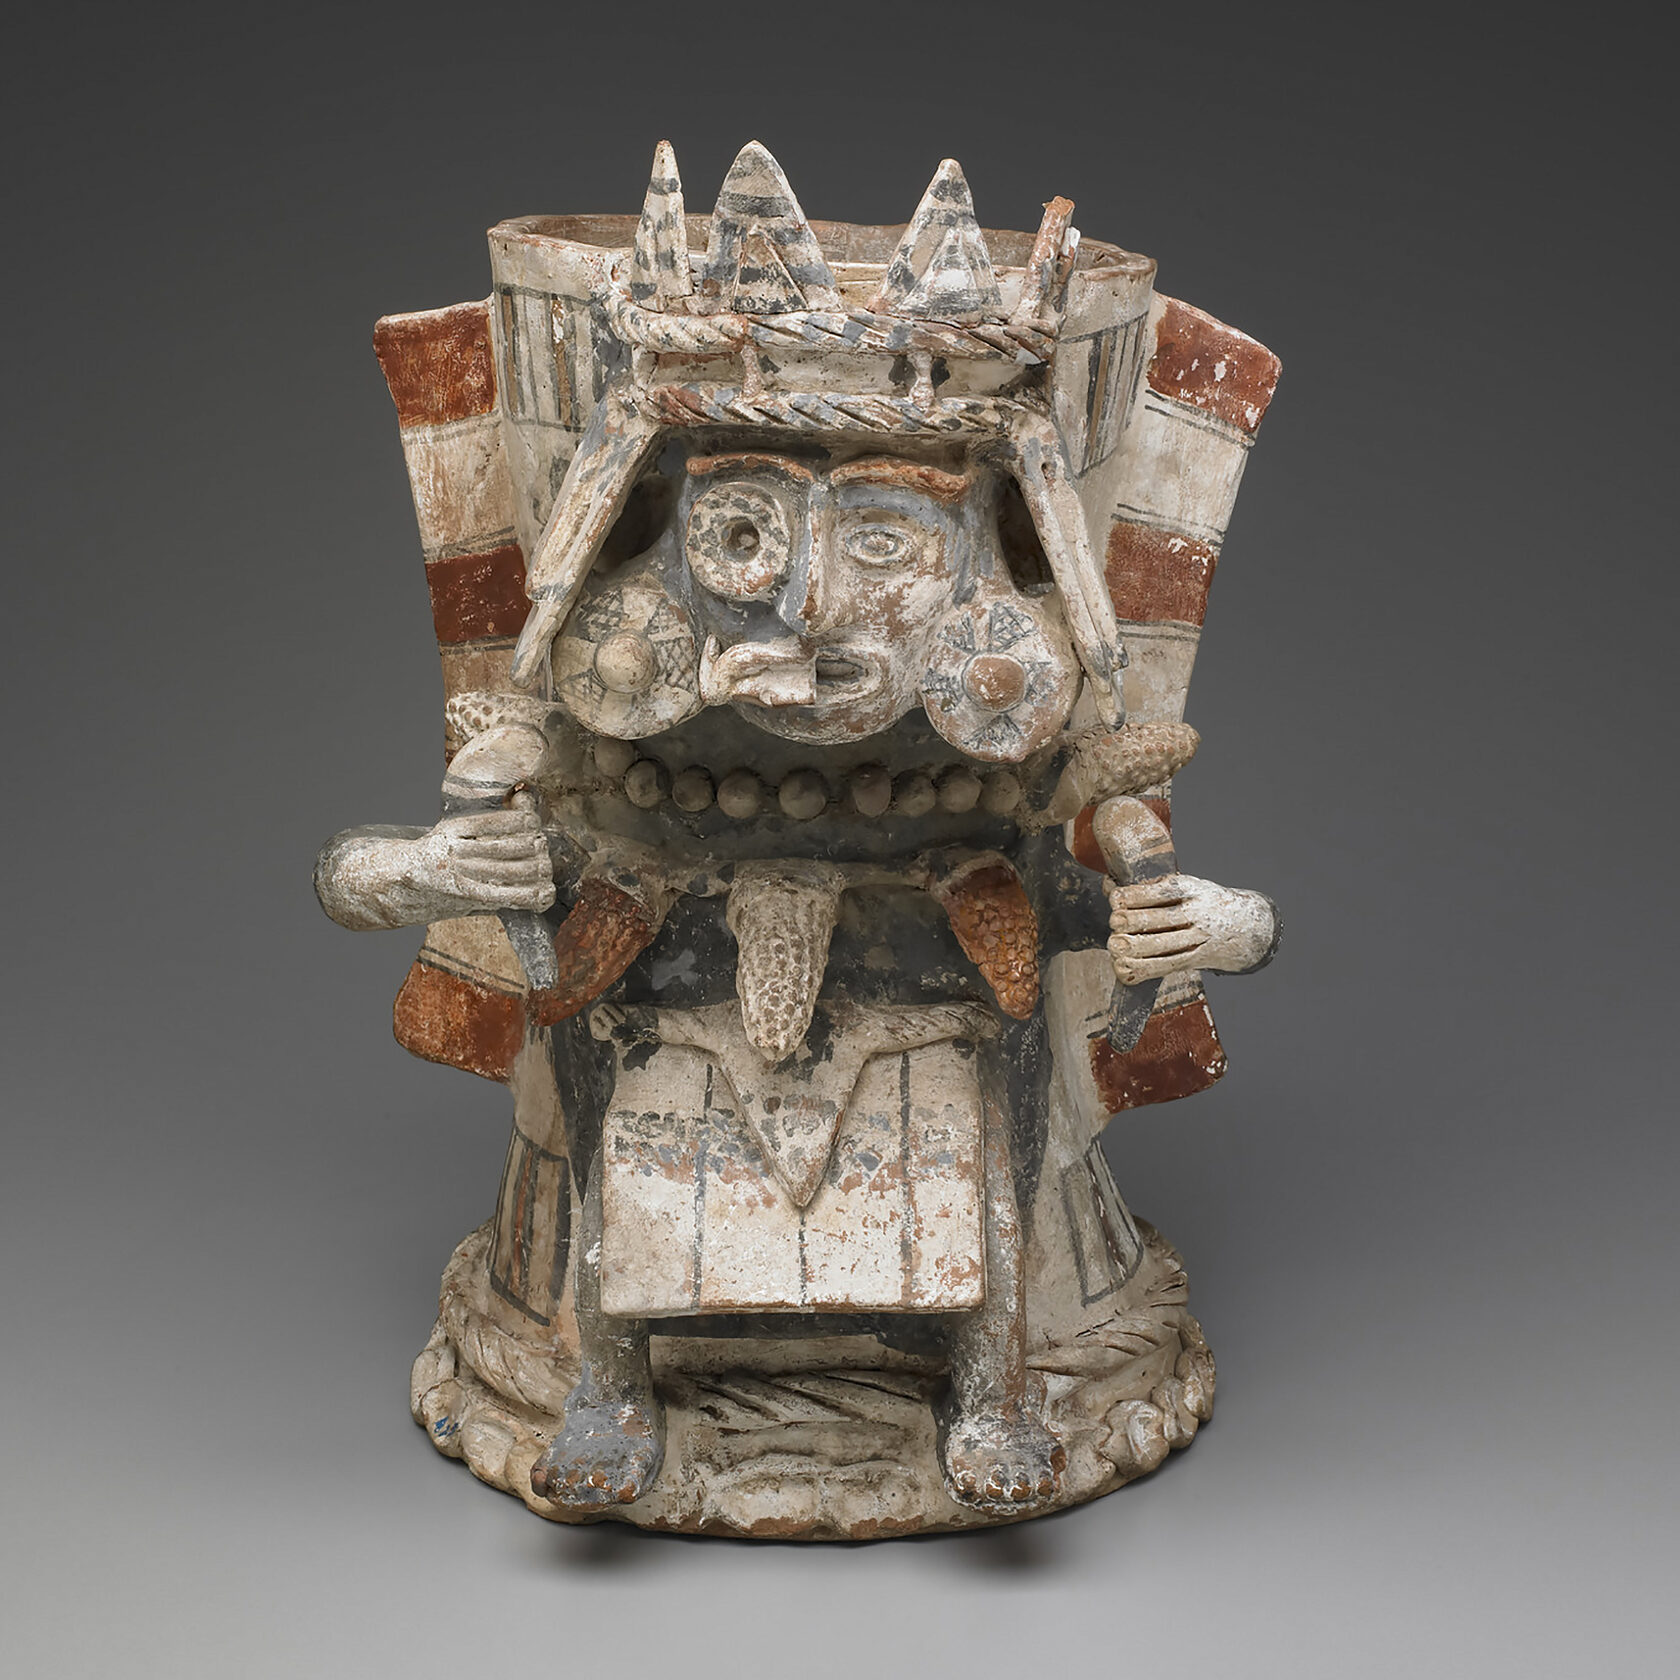 Жаровня с изображением Тлалока. Ацтеки, 1325-1521 гг. н.э. Коллекция Yale University Art Gallery.